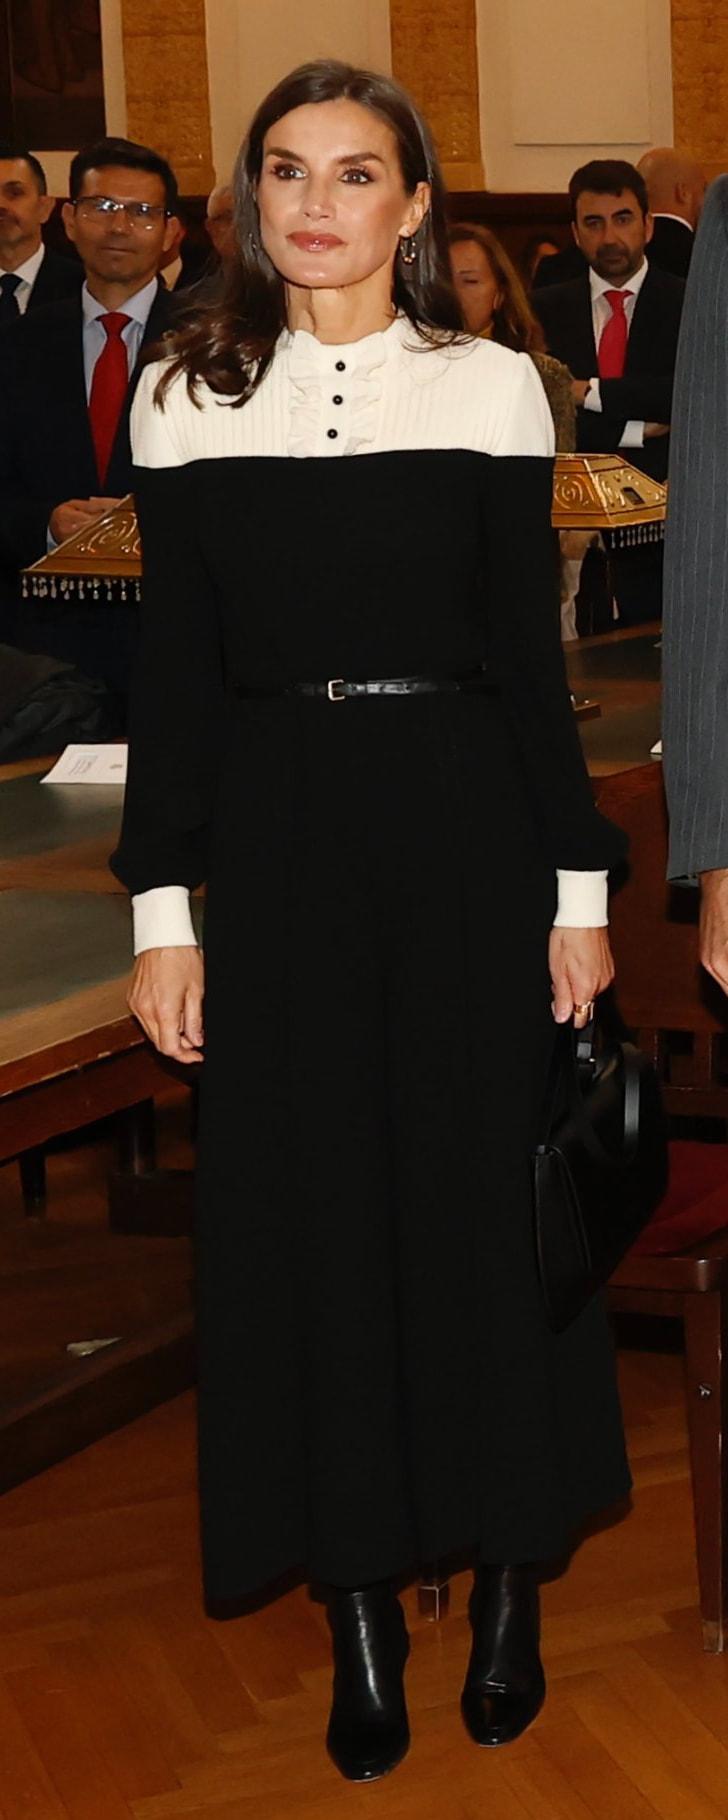 Adolfo Dominguez Vachetta Shoulder Bag in Black as carried by Queen Letizia.